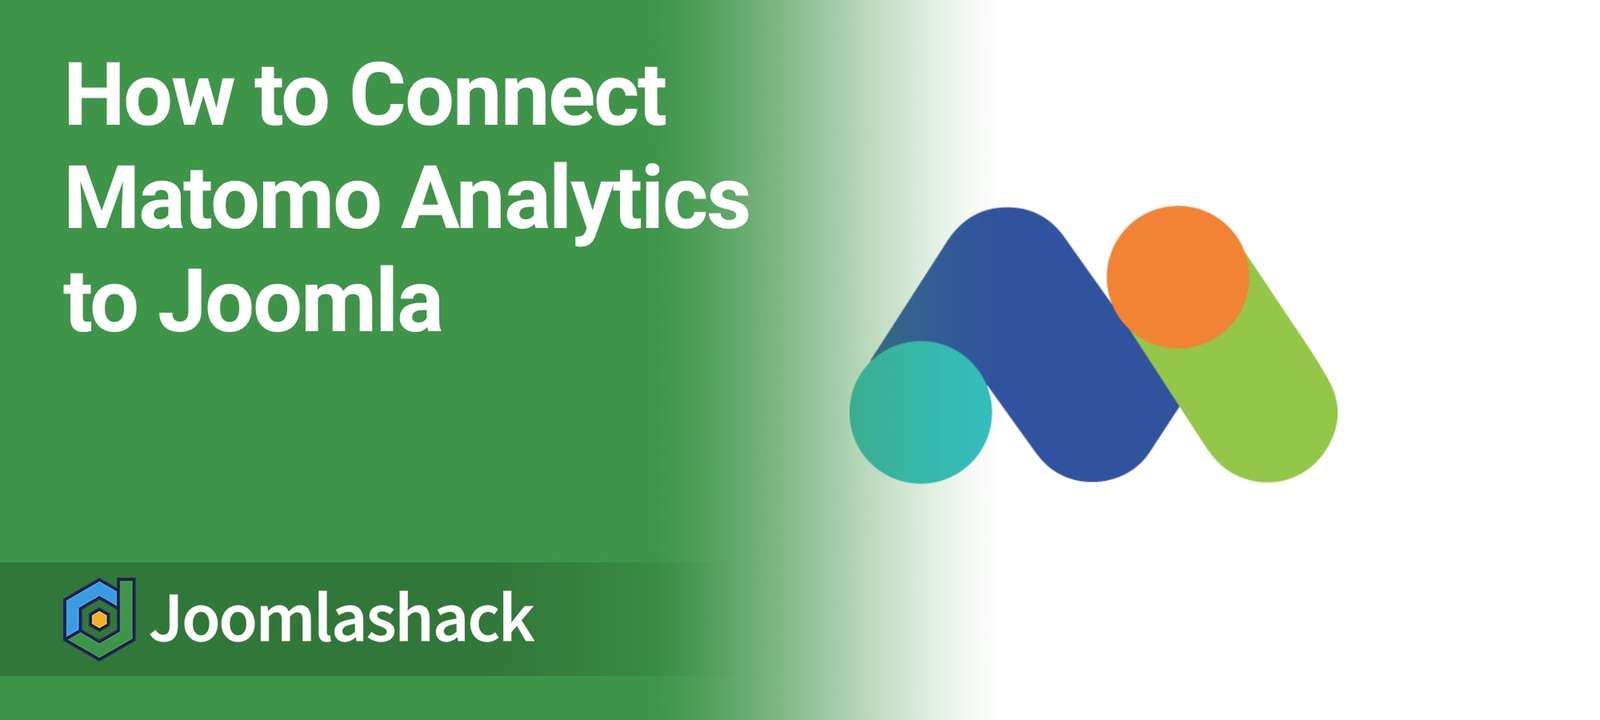 Connect Matomo Analytics to a Joomla Site